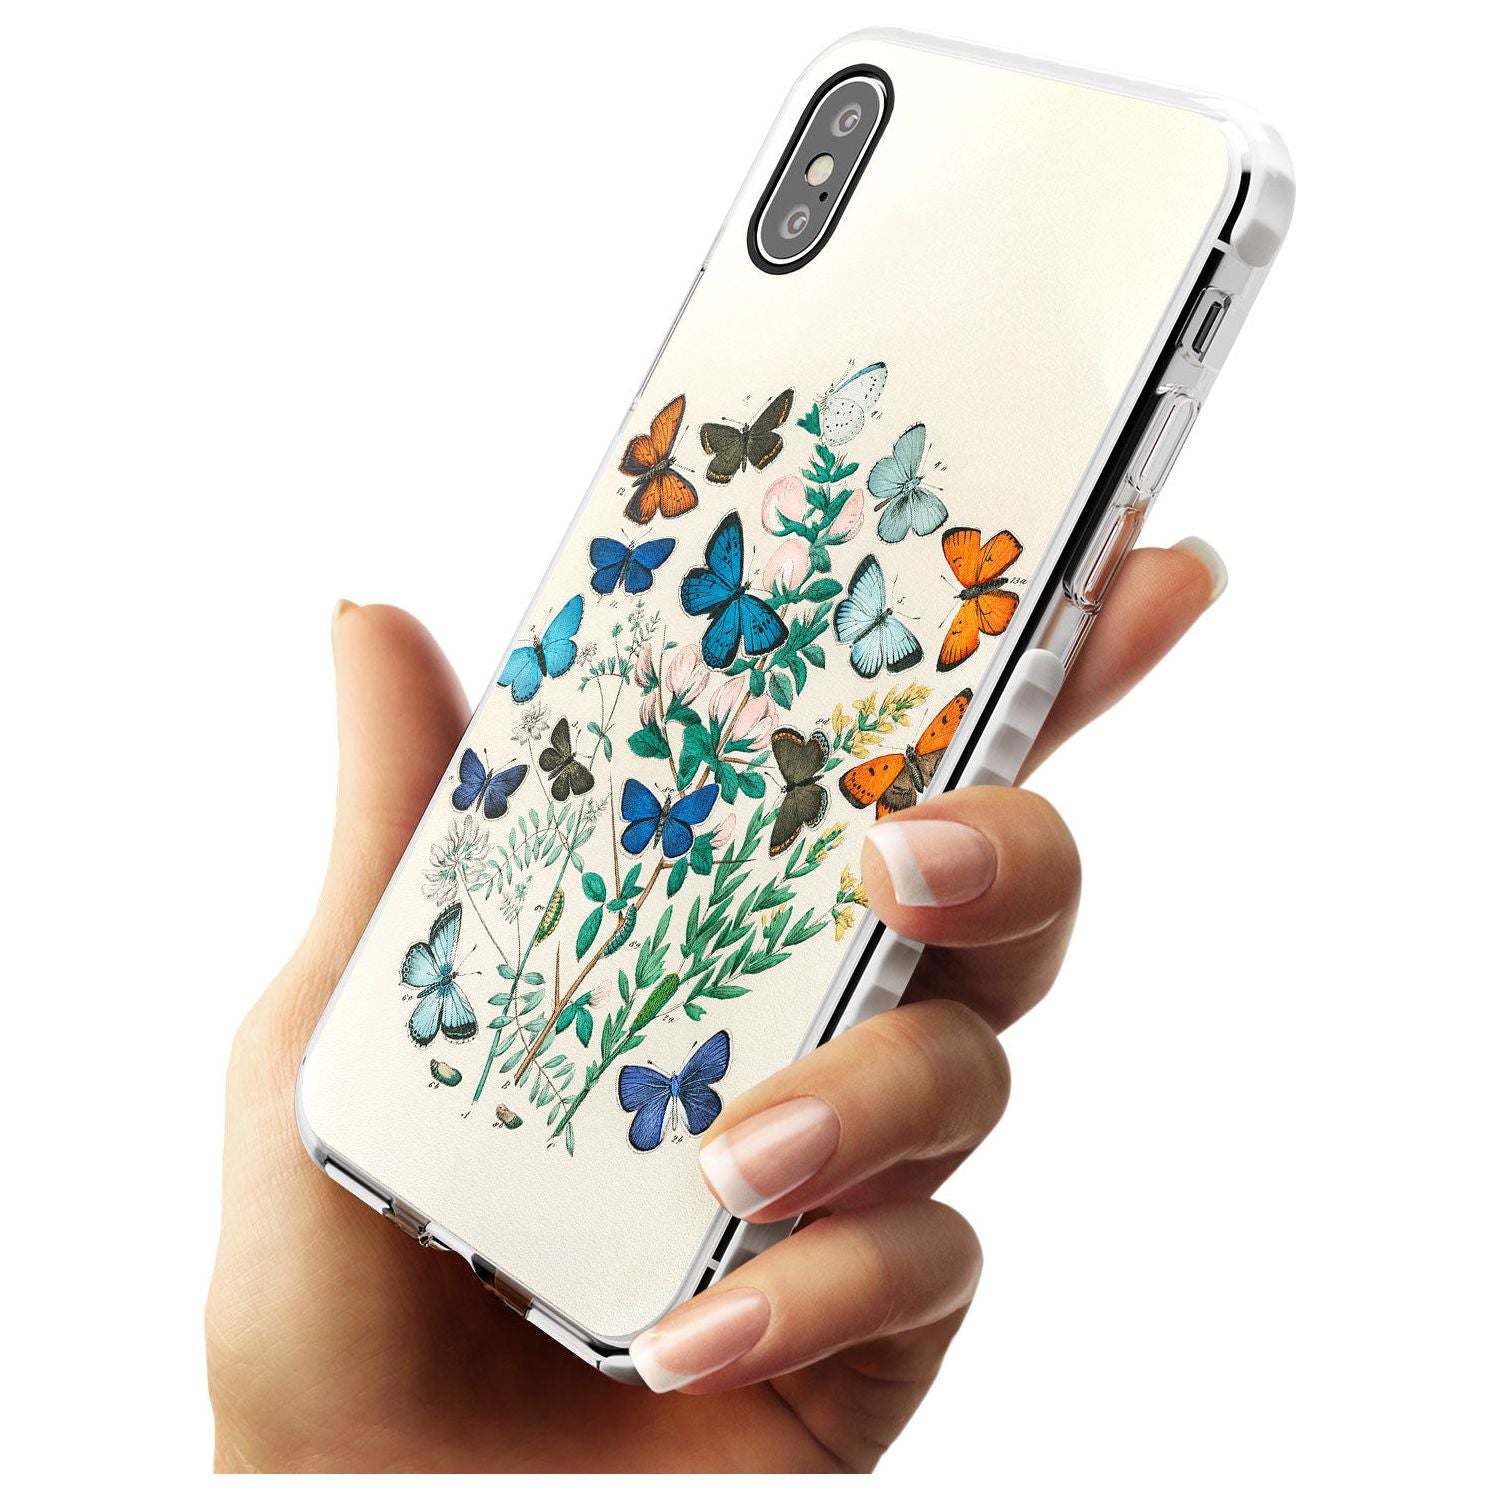 European Butterflies Impact Phone Case for iPhone X XS Max XR